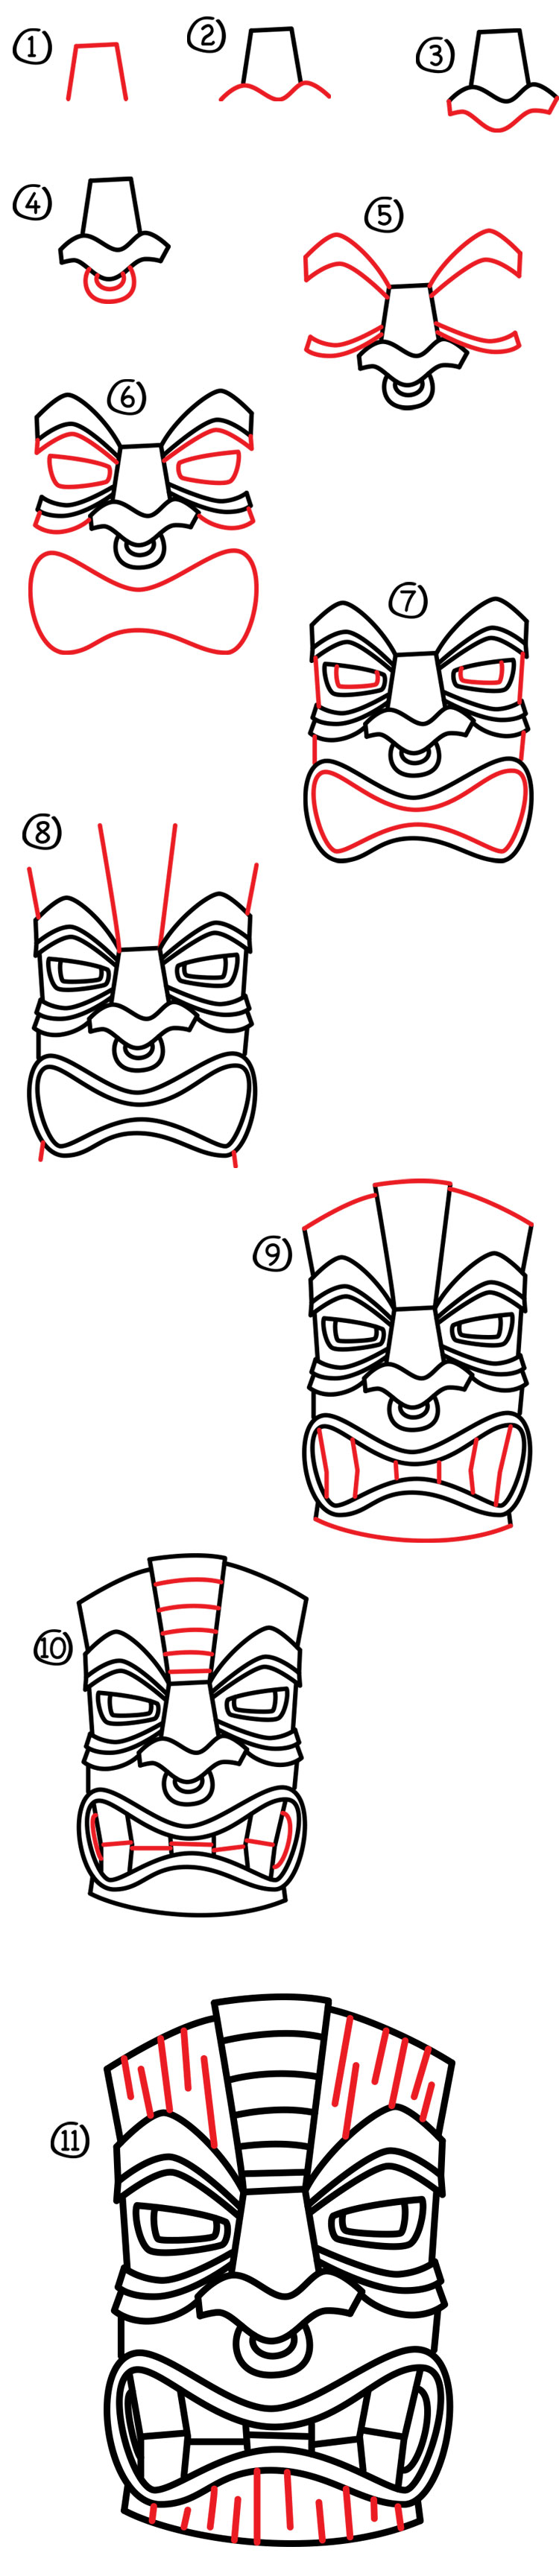 Tiki statue drawing